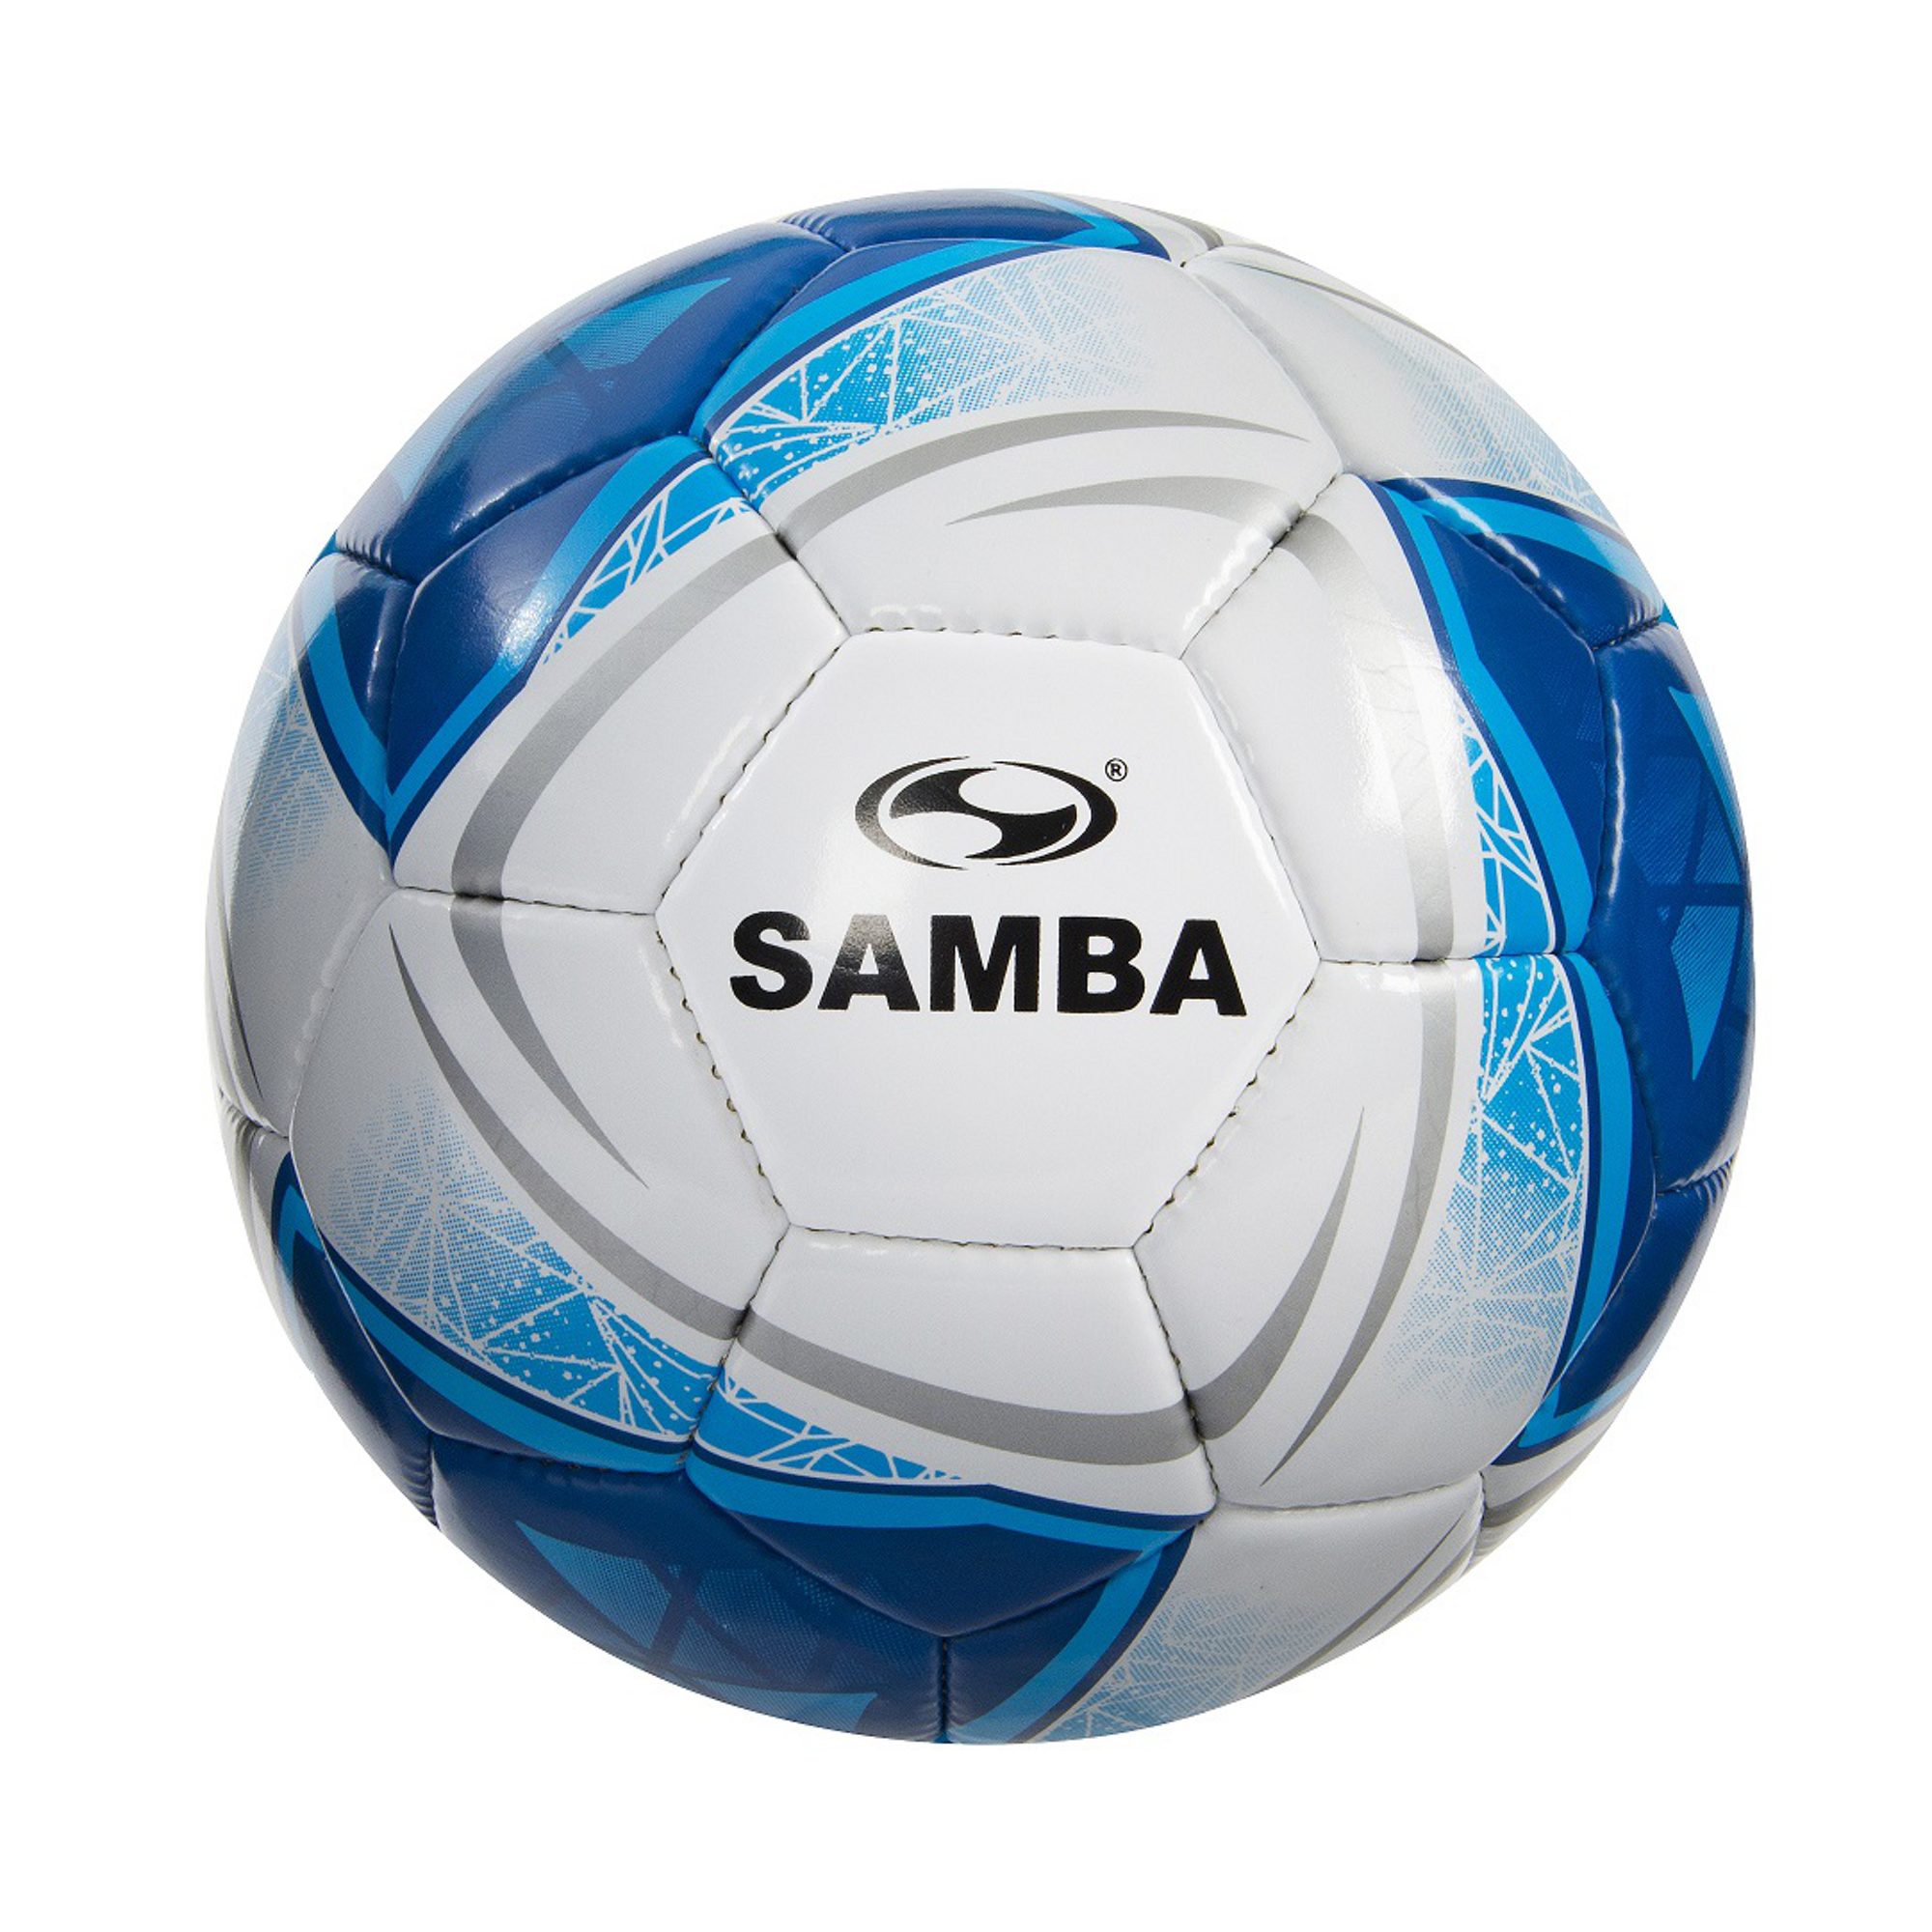 Samba Edu Football Wht Blu Slvr S5